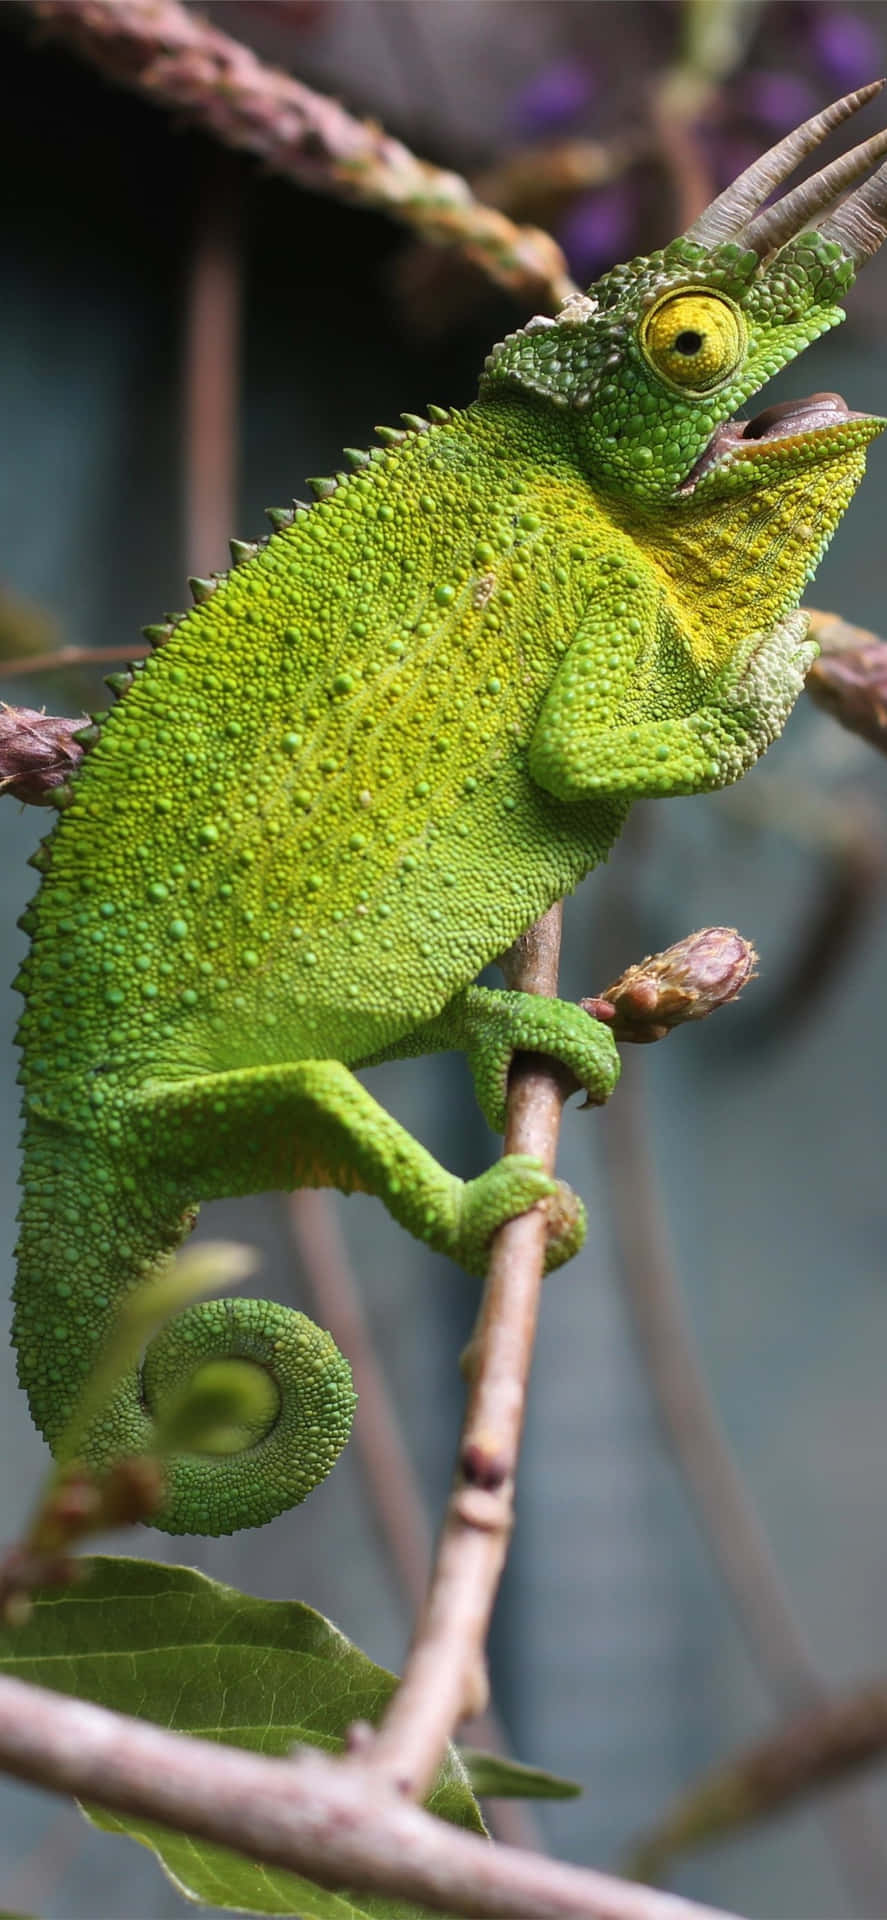 Imagende Una Iguana Verde En Una Rama